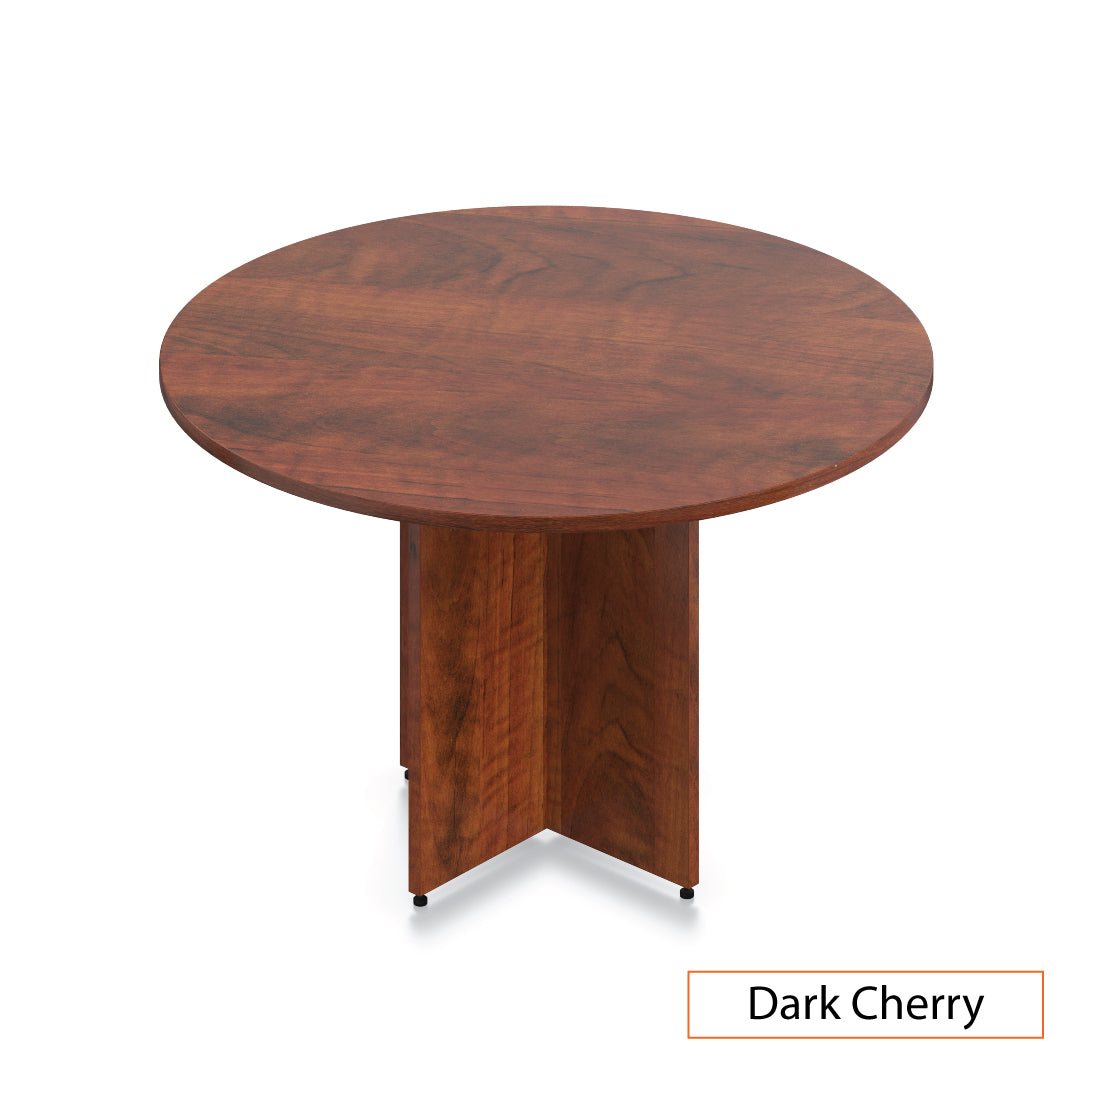 48" Round Table/Cross Base with 4 Chairs (G11650B) - Kainosbuy.com